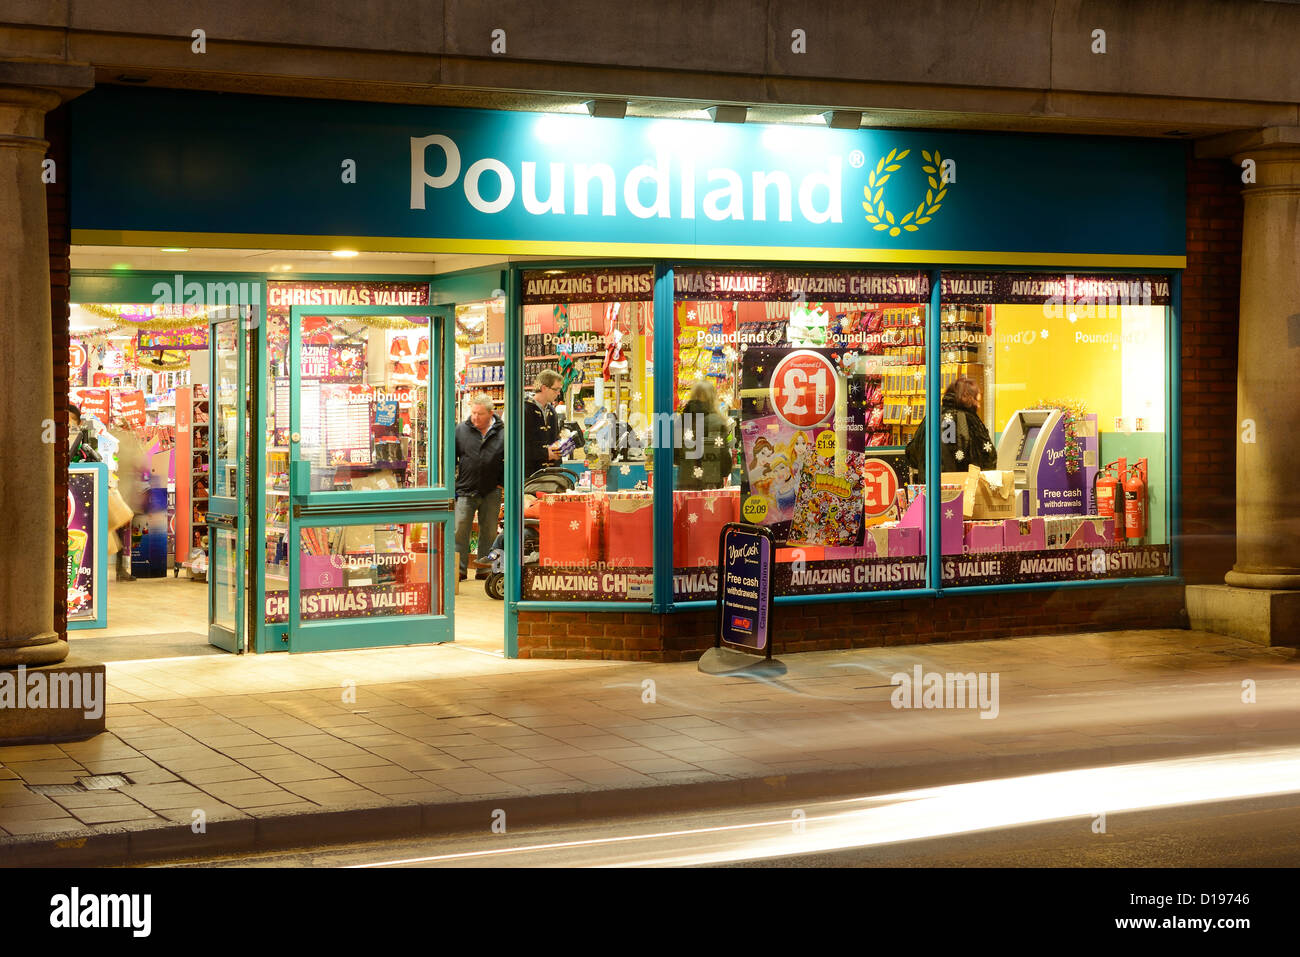 Poundland shop front at night Stock Photo